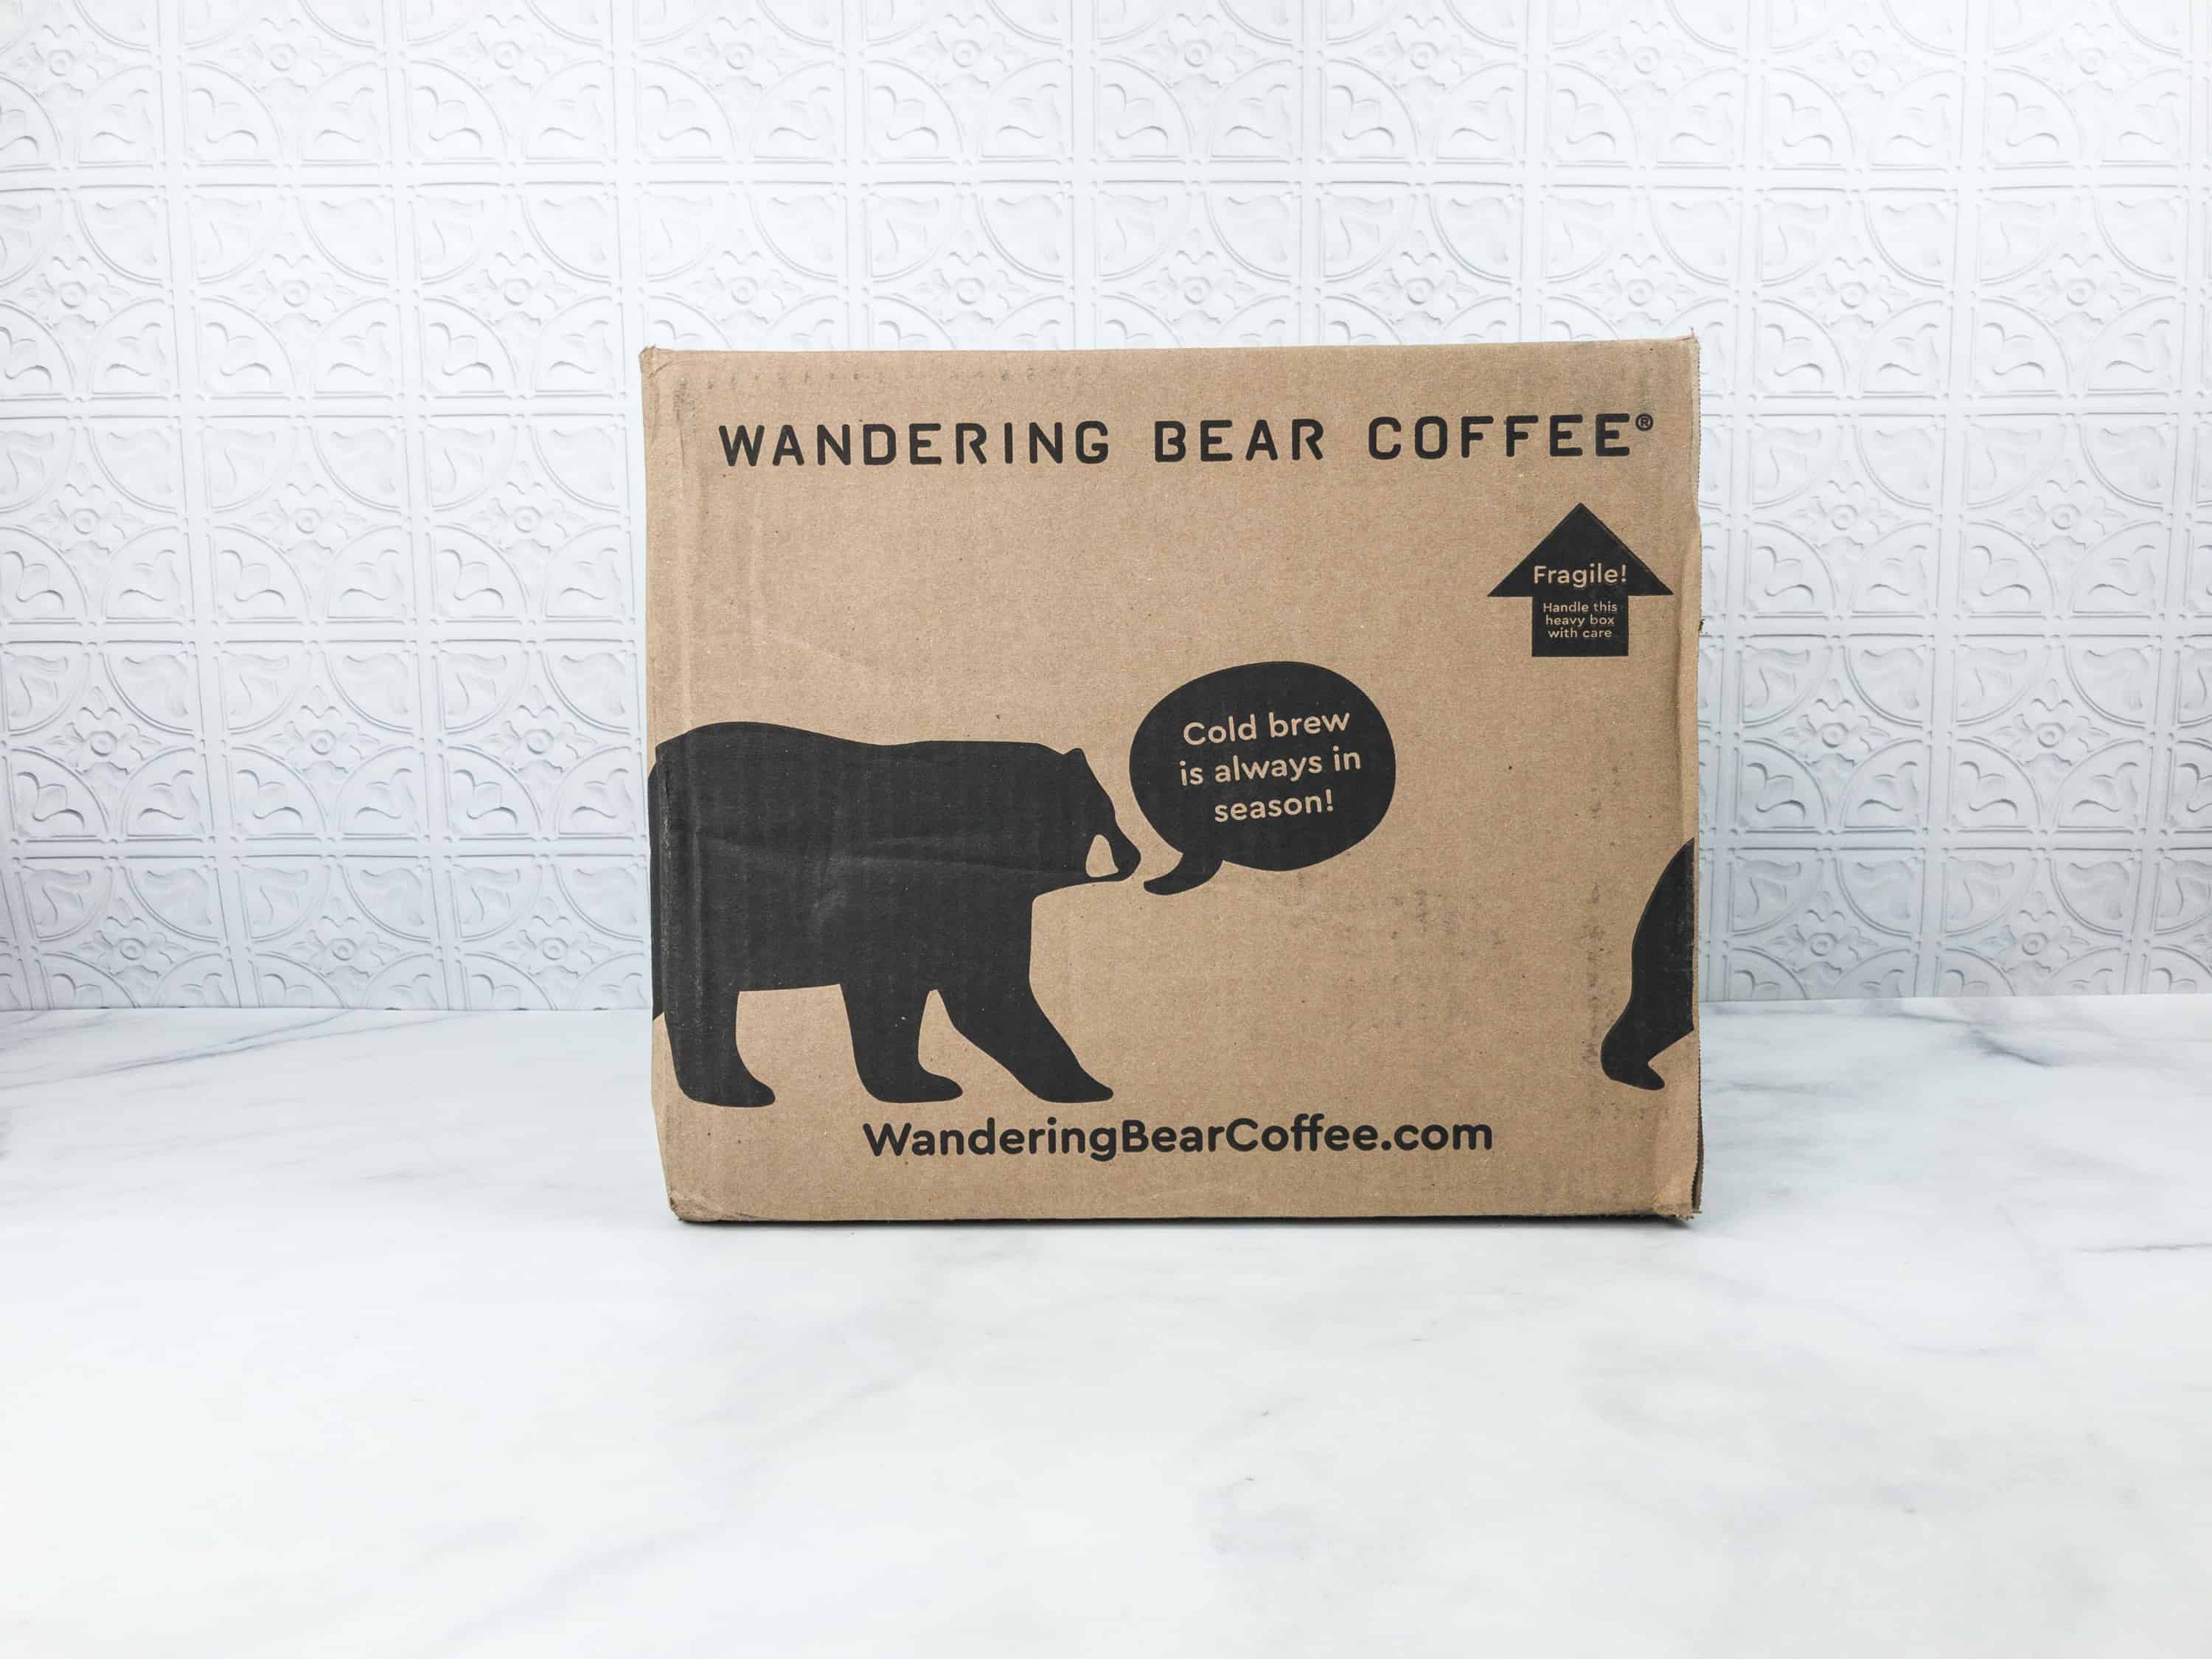 is wandering bear coffee good